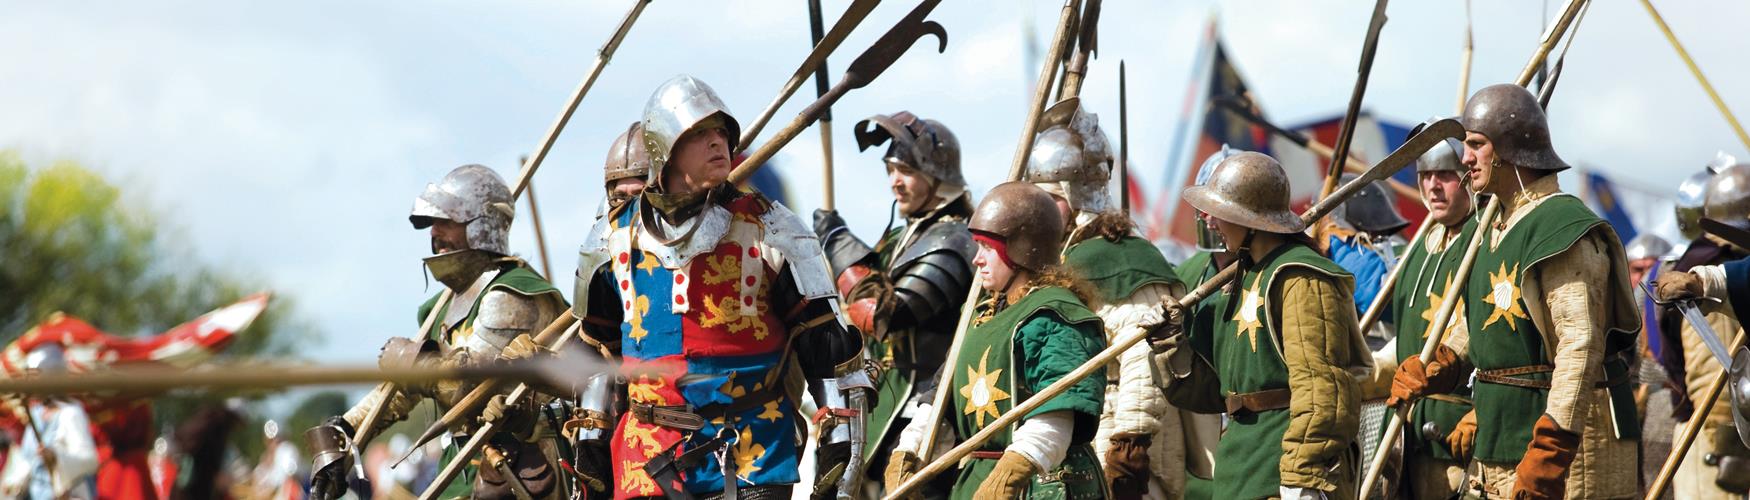 Battle of Tewkesbury 1471